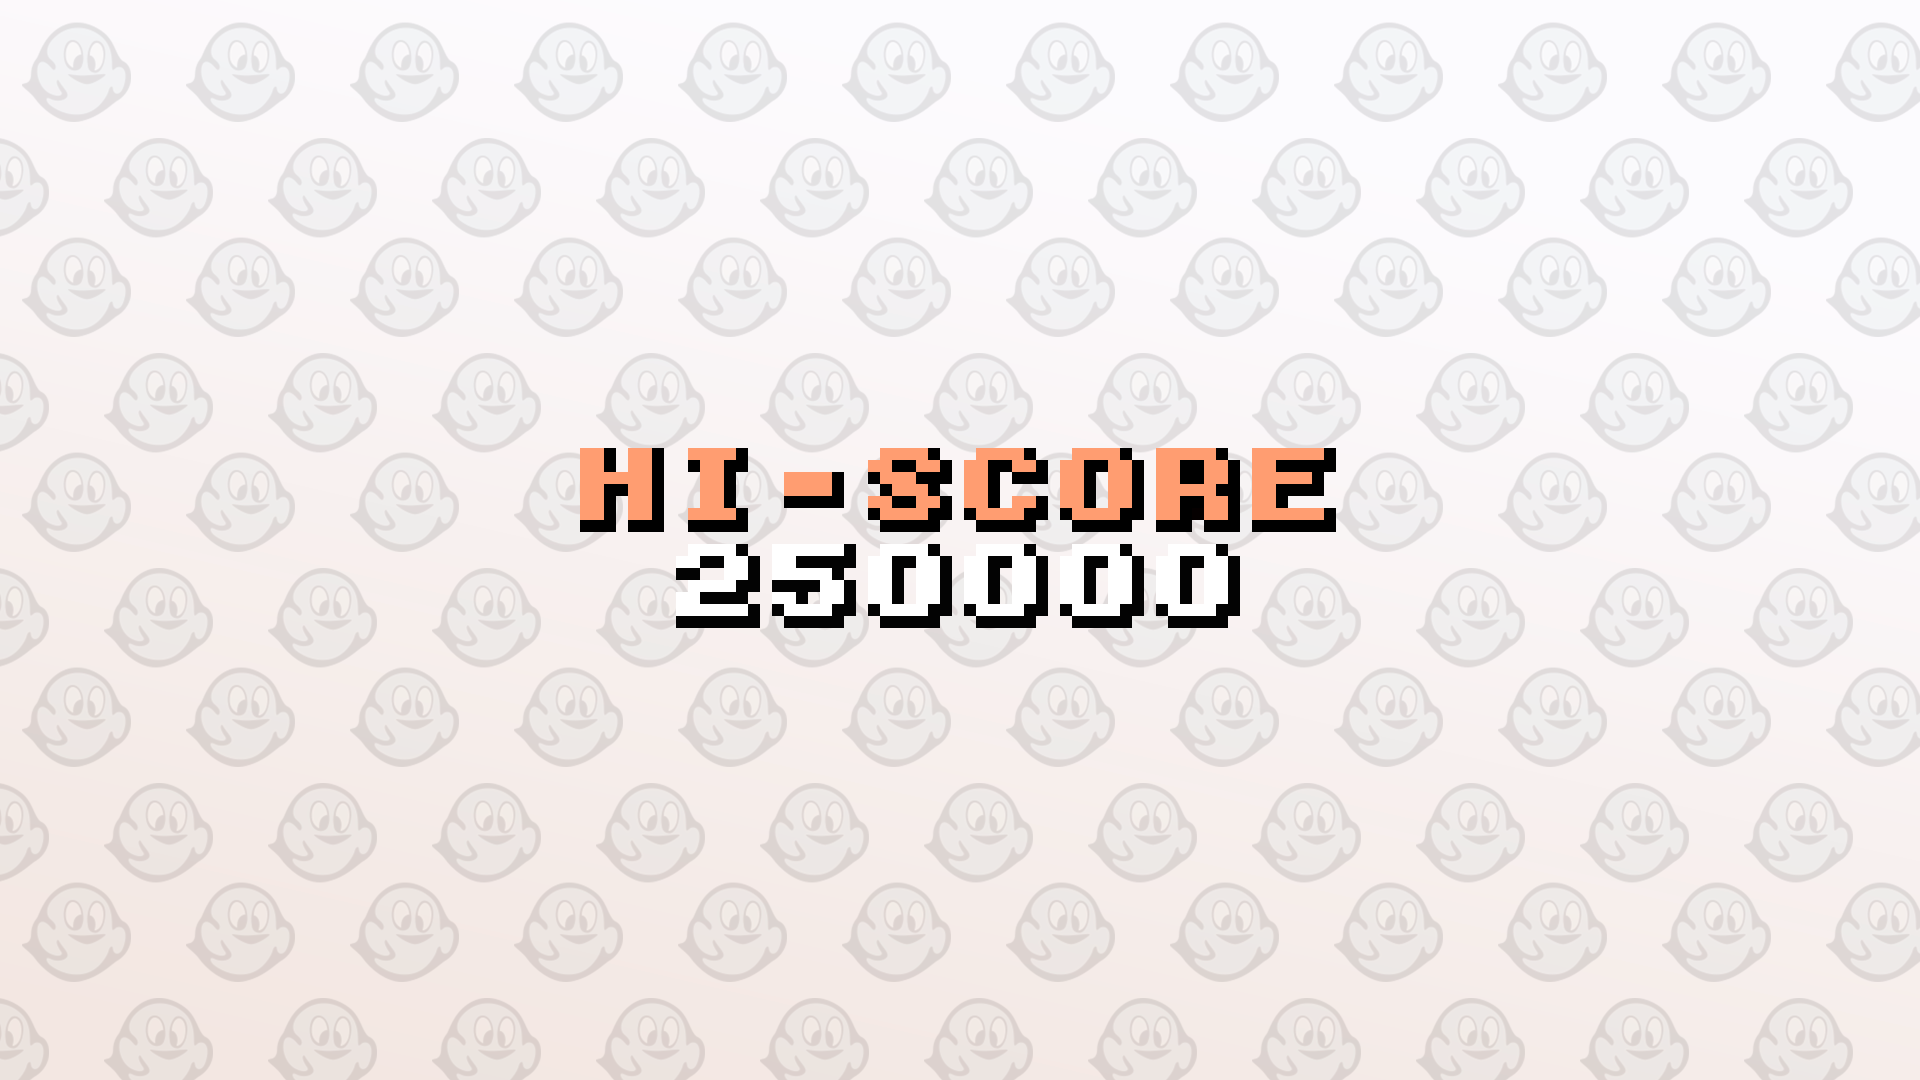 Icon for Score 250k